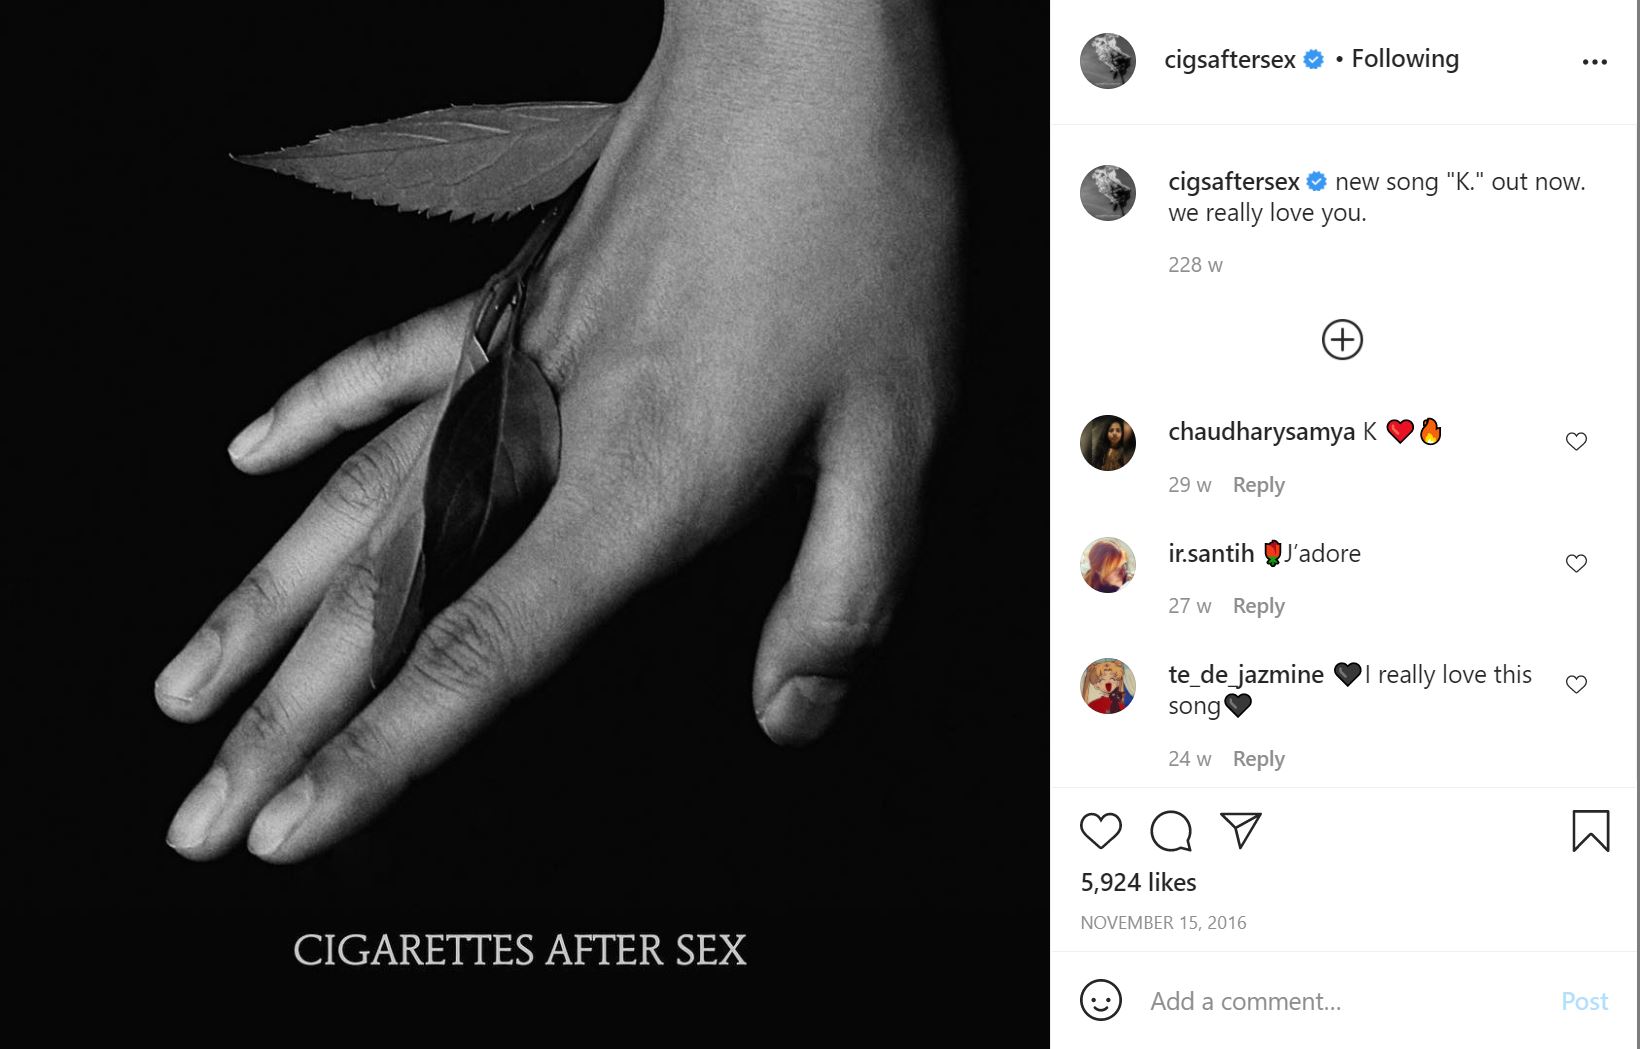 Cigarettes After Sex.